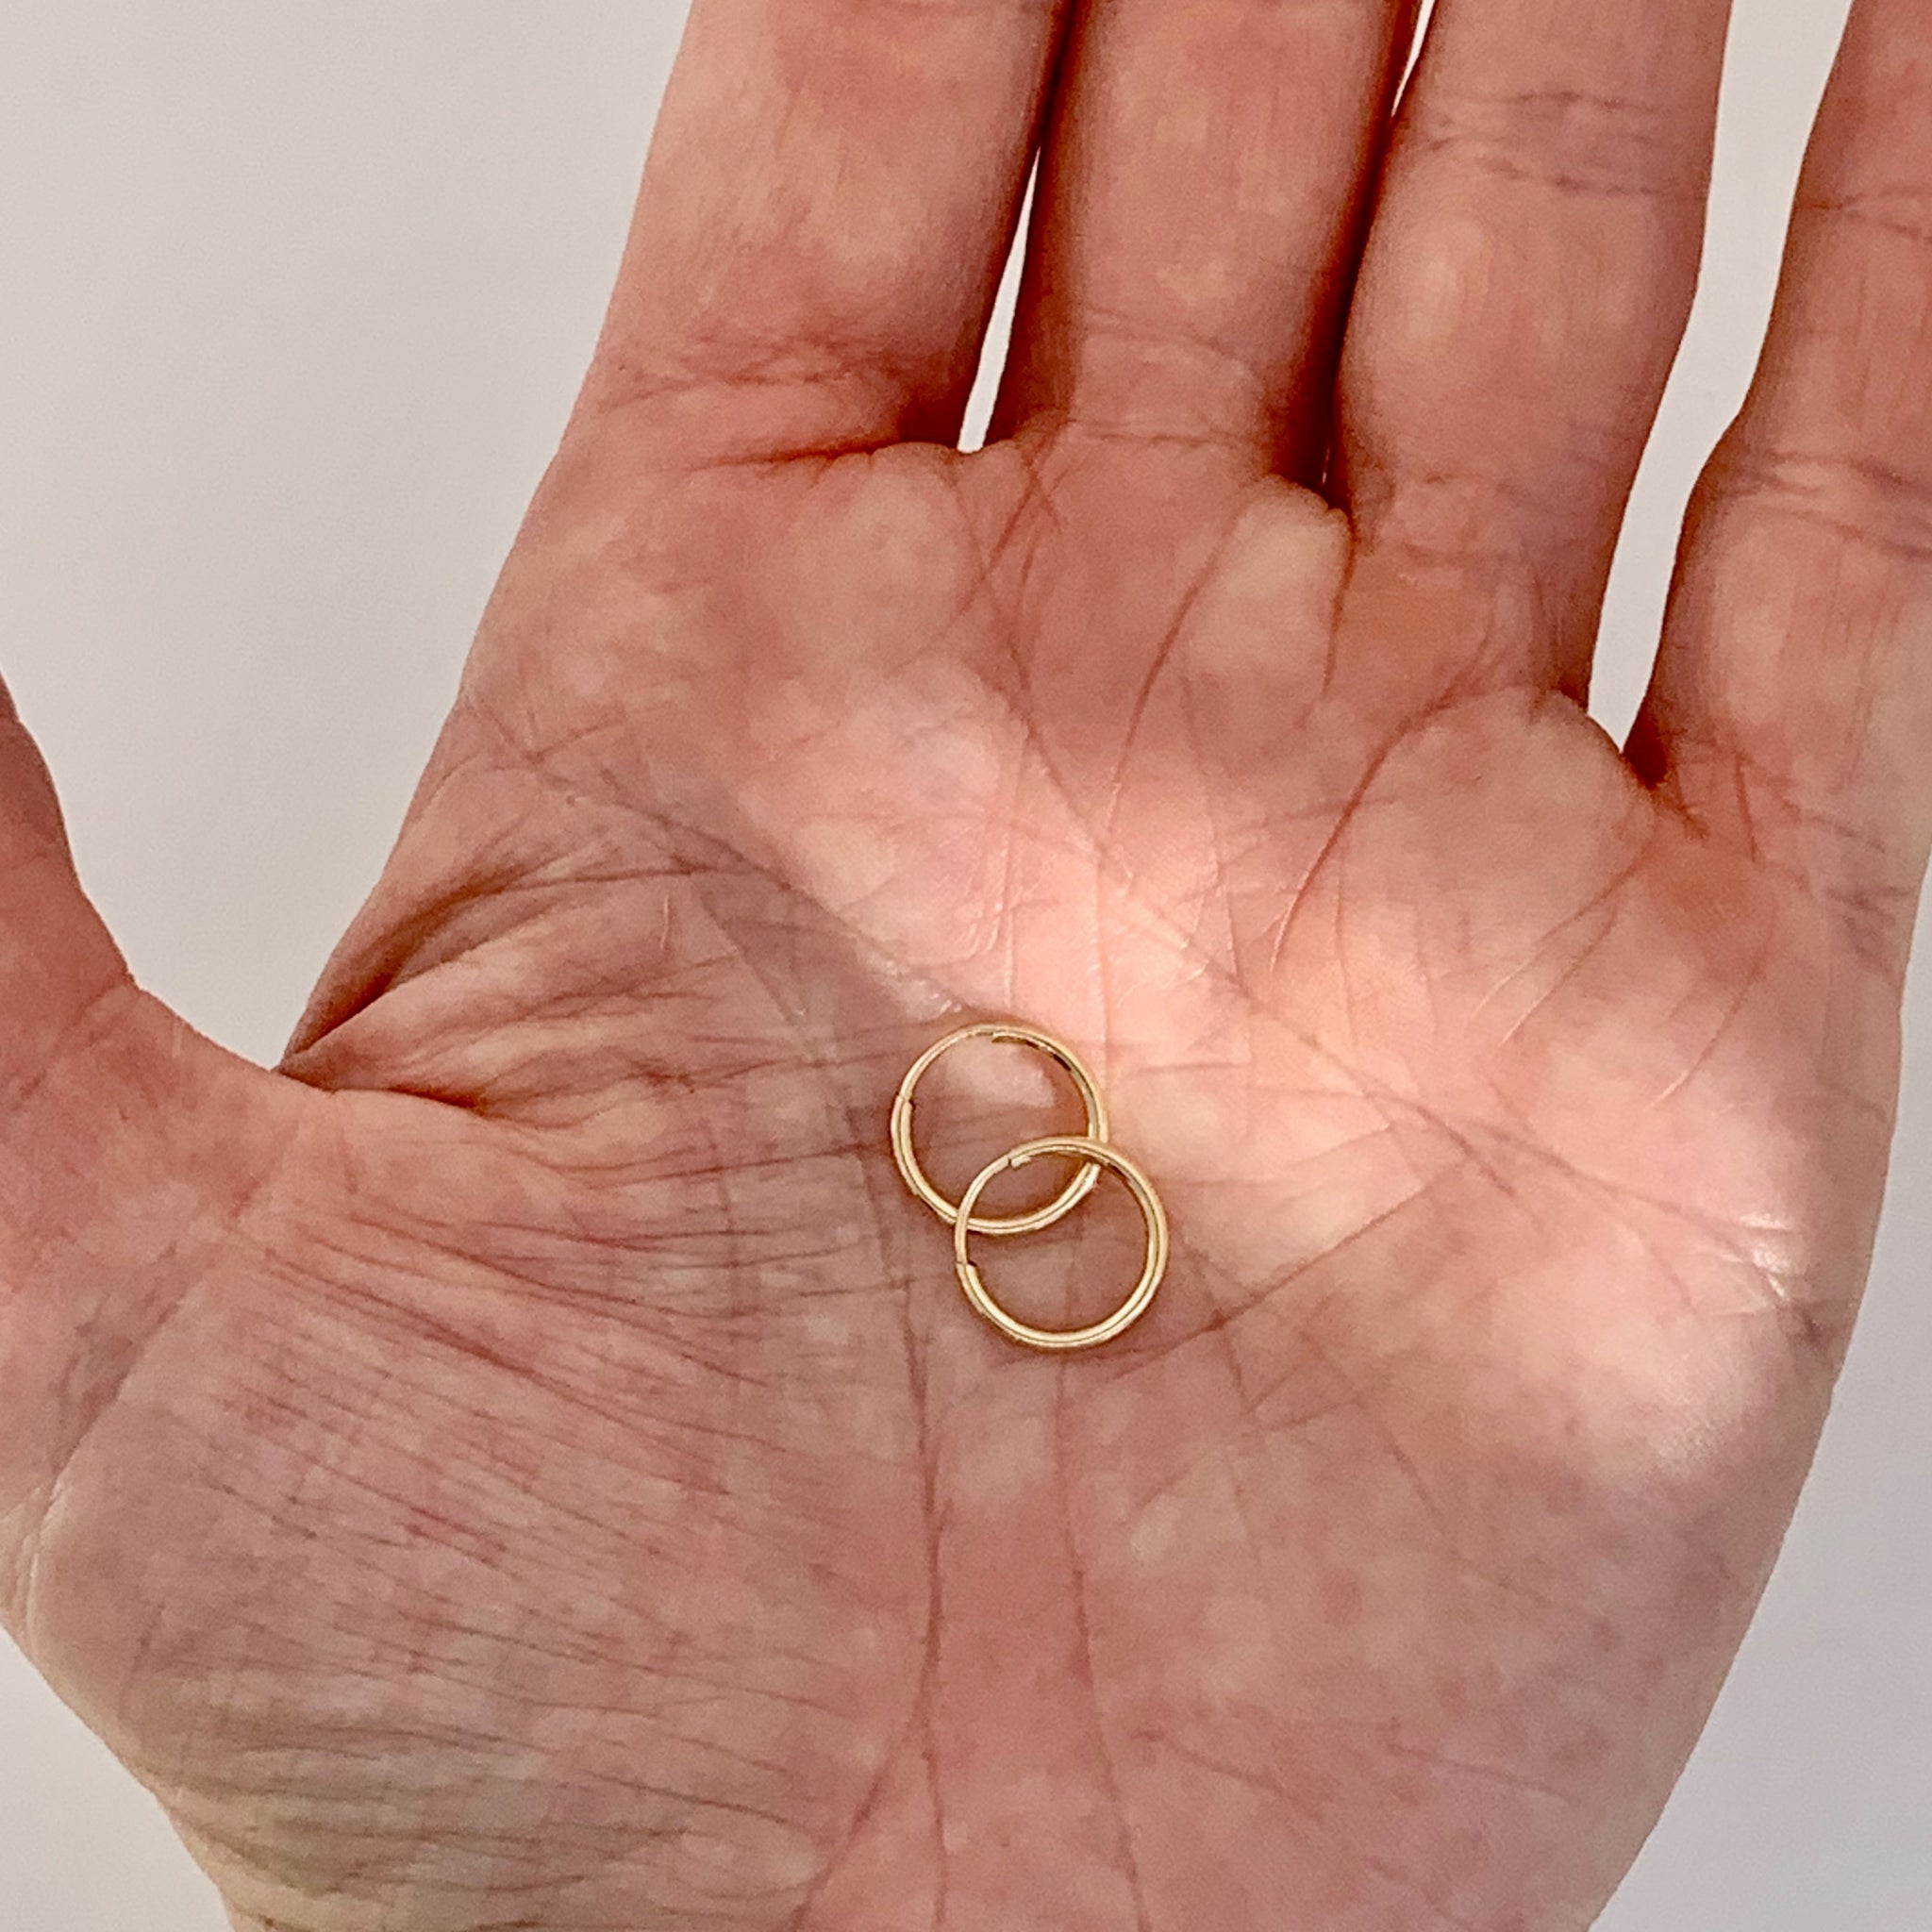 Delicate gold hoops.  Gold-filled hoop earrings. 10mm diameter by kp jewelry co.